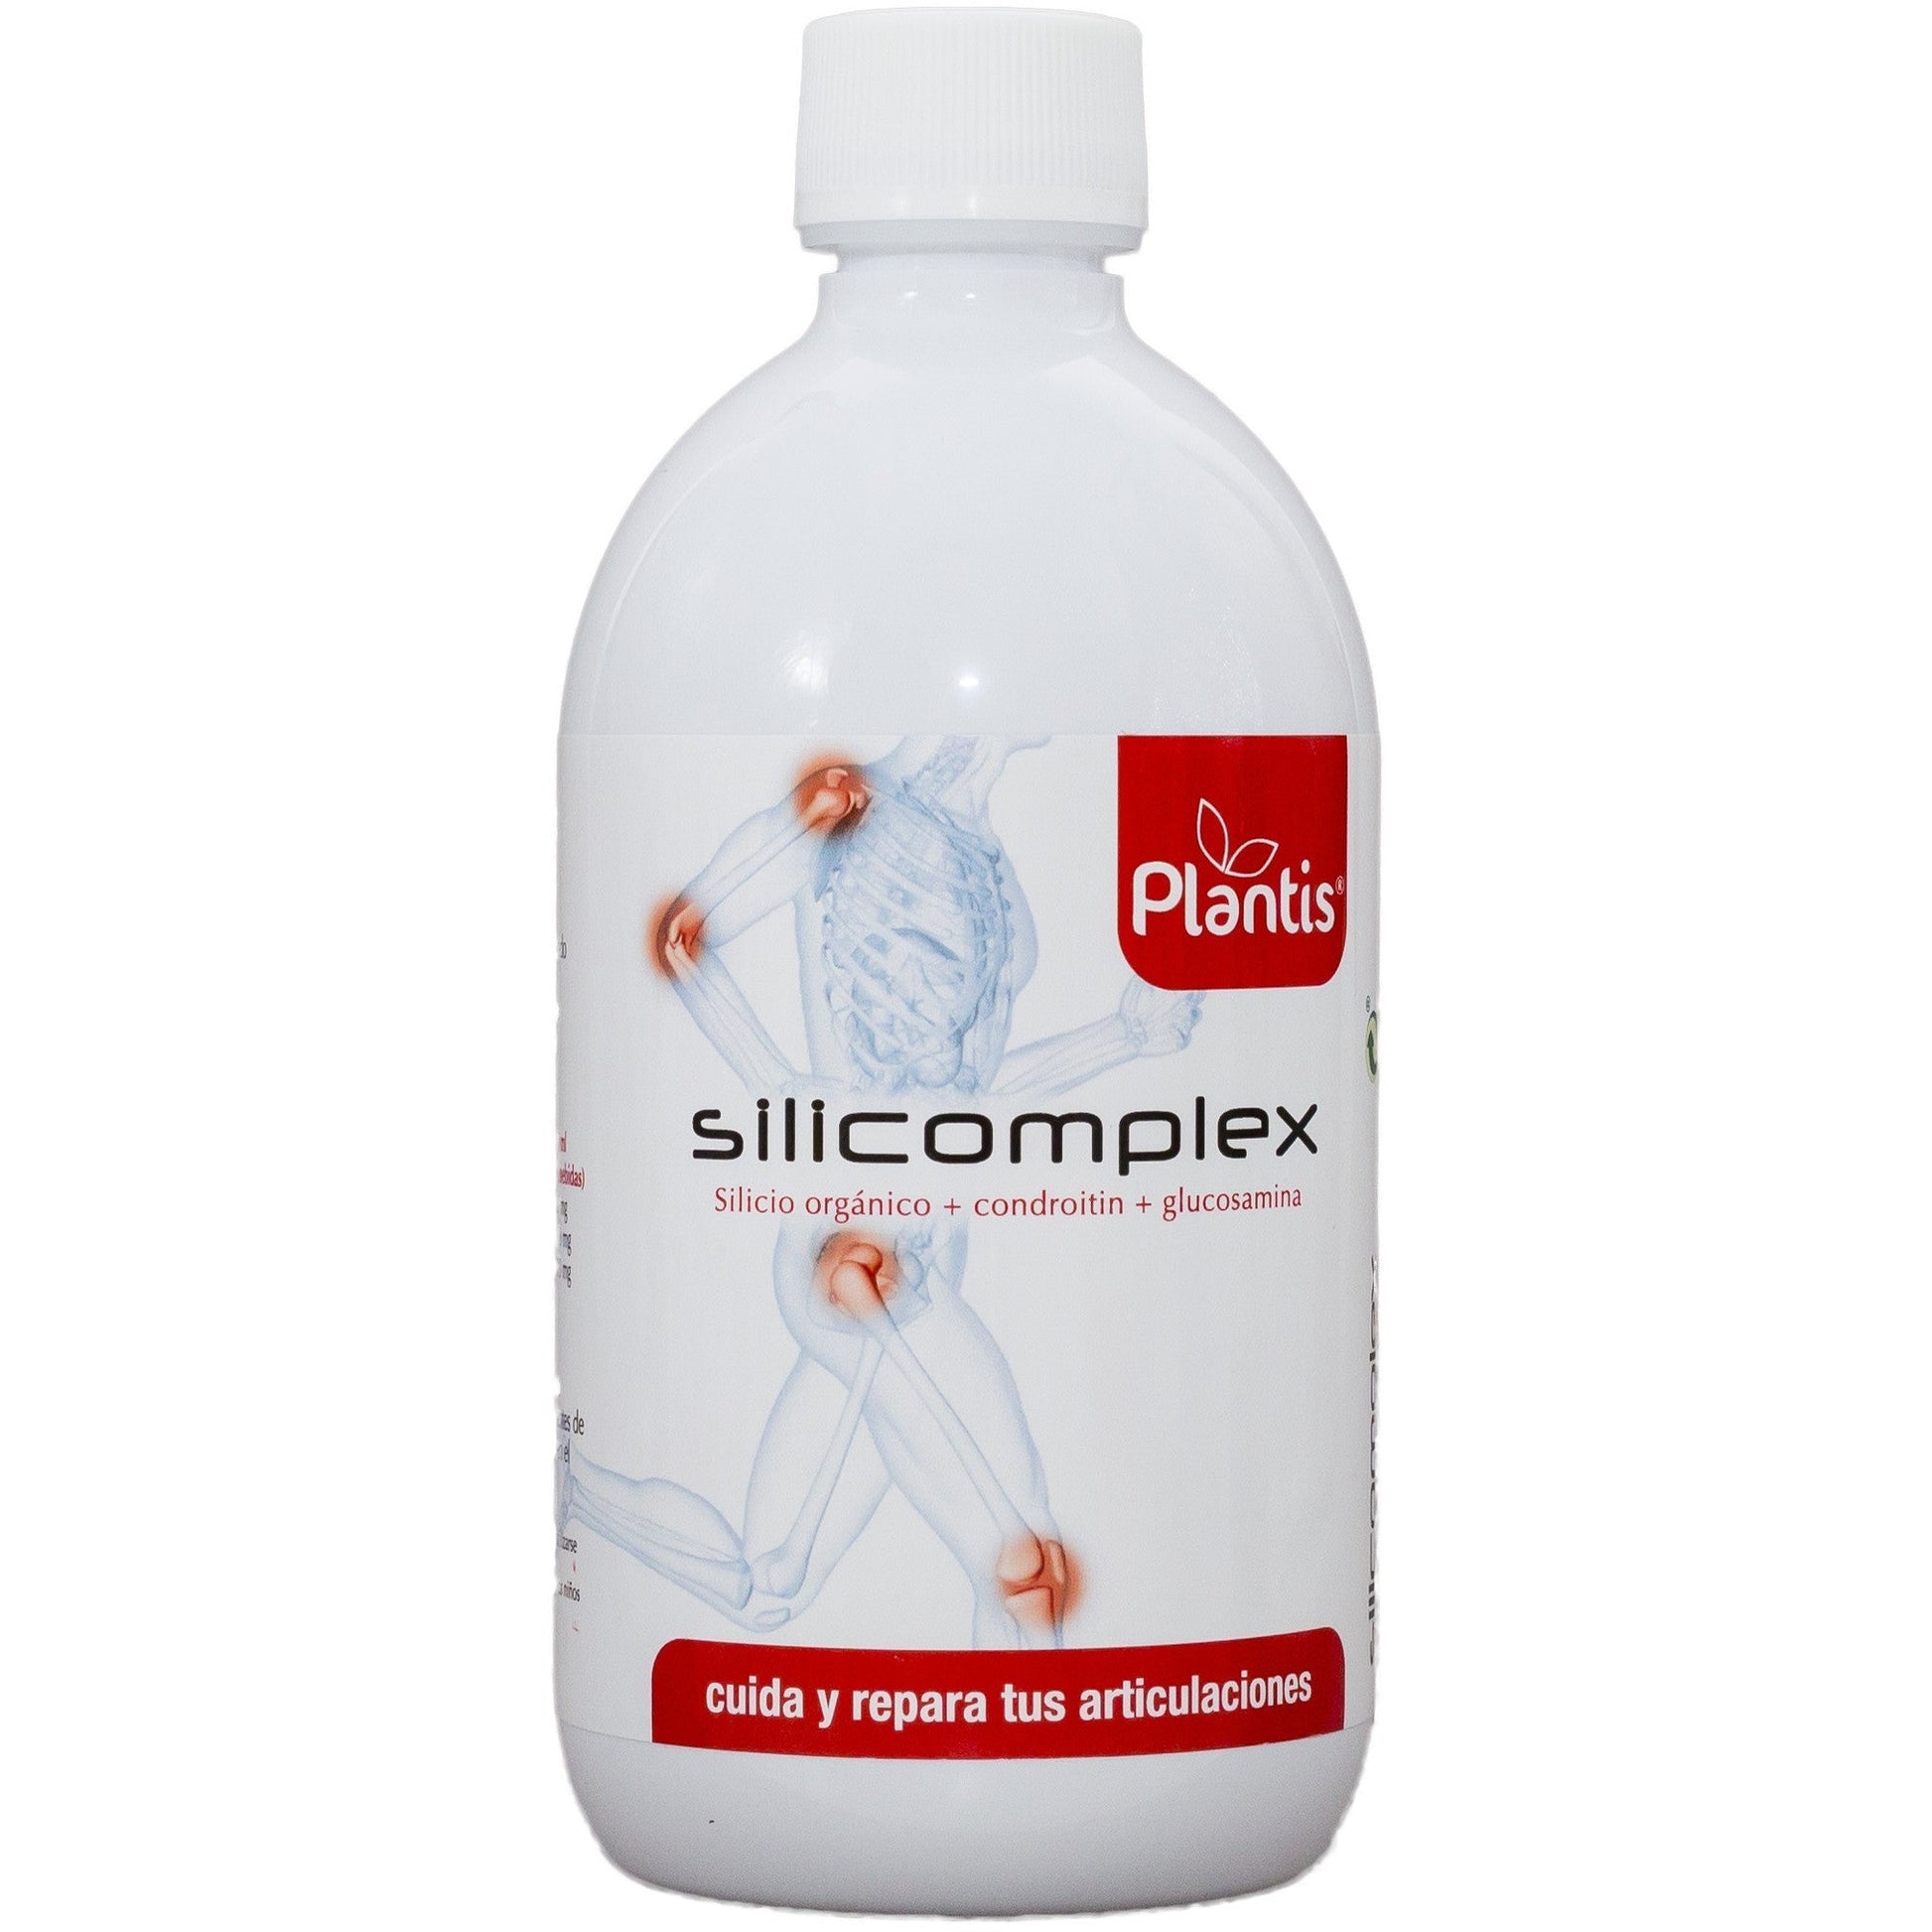 Silicomplex 500 ml | Plantis - Dietetica Ferrer